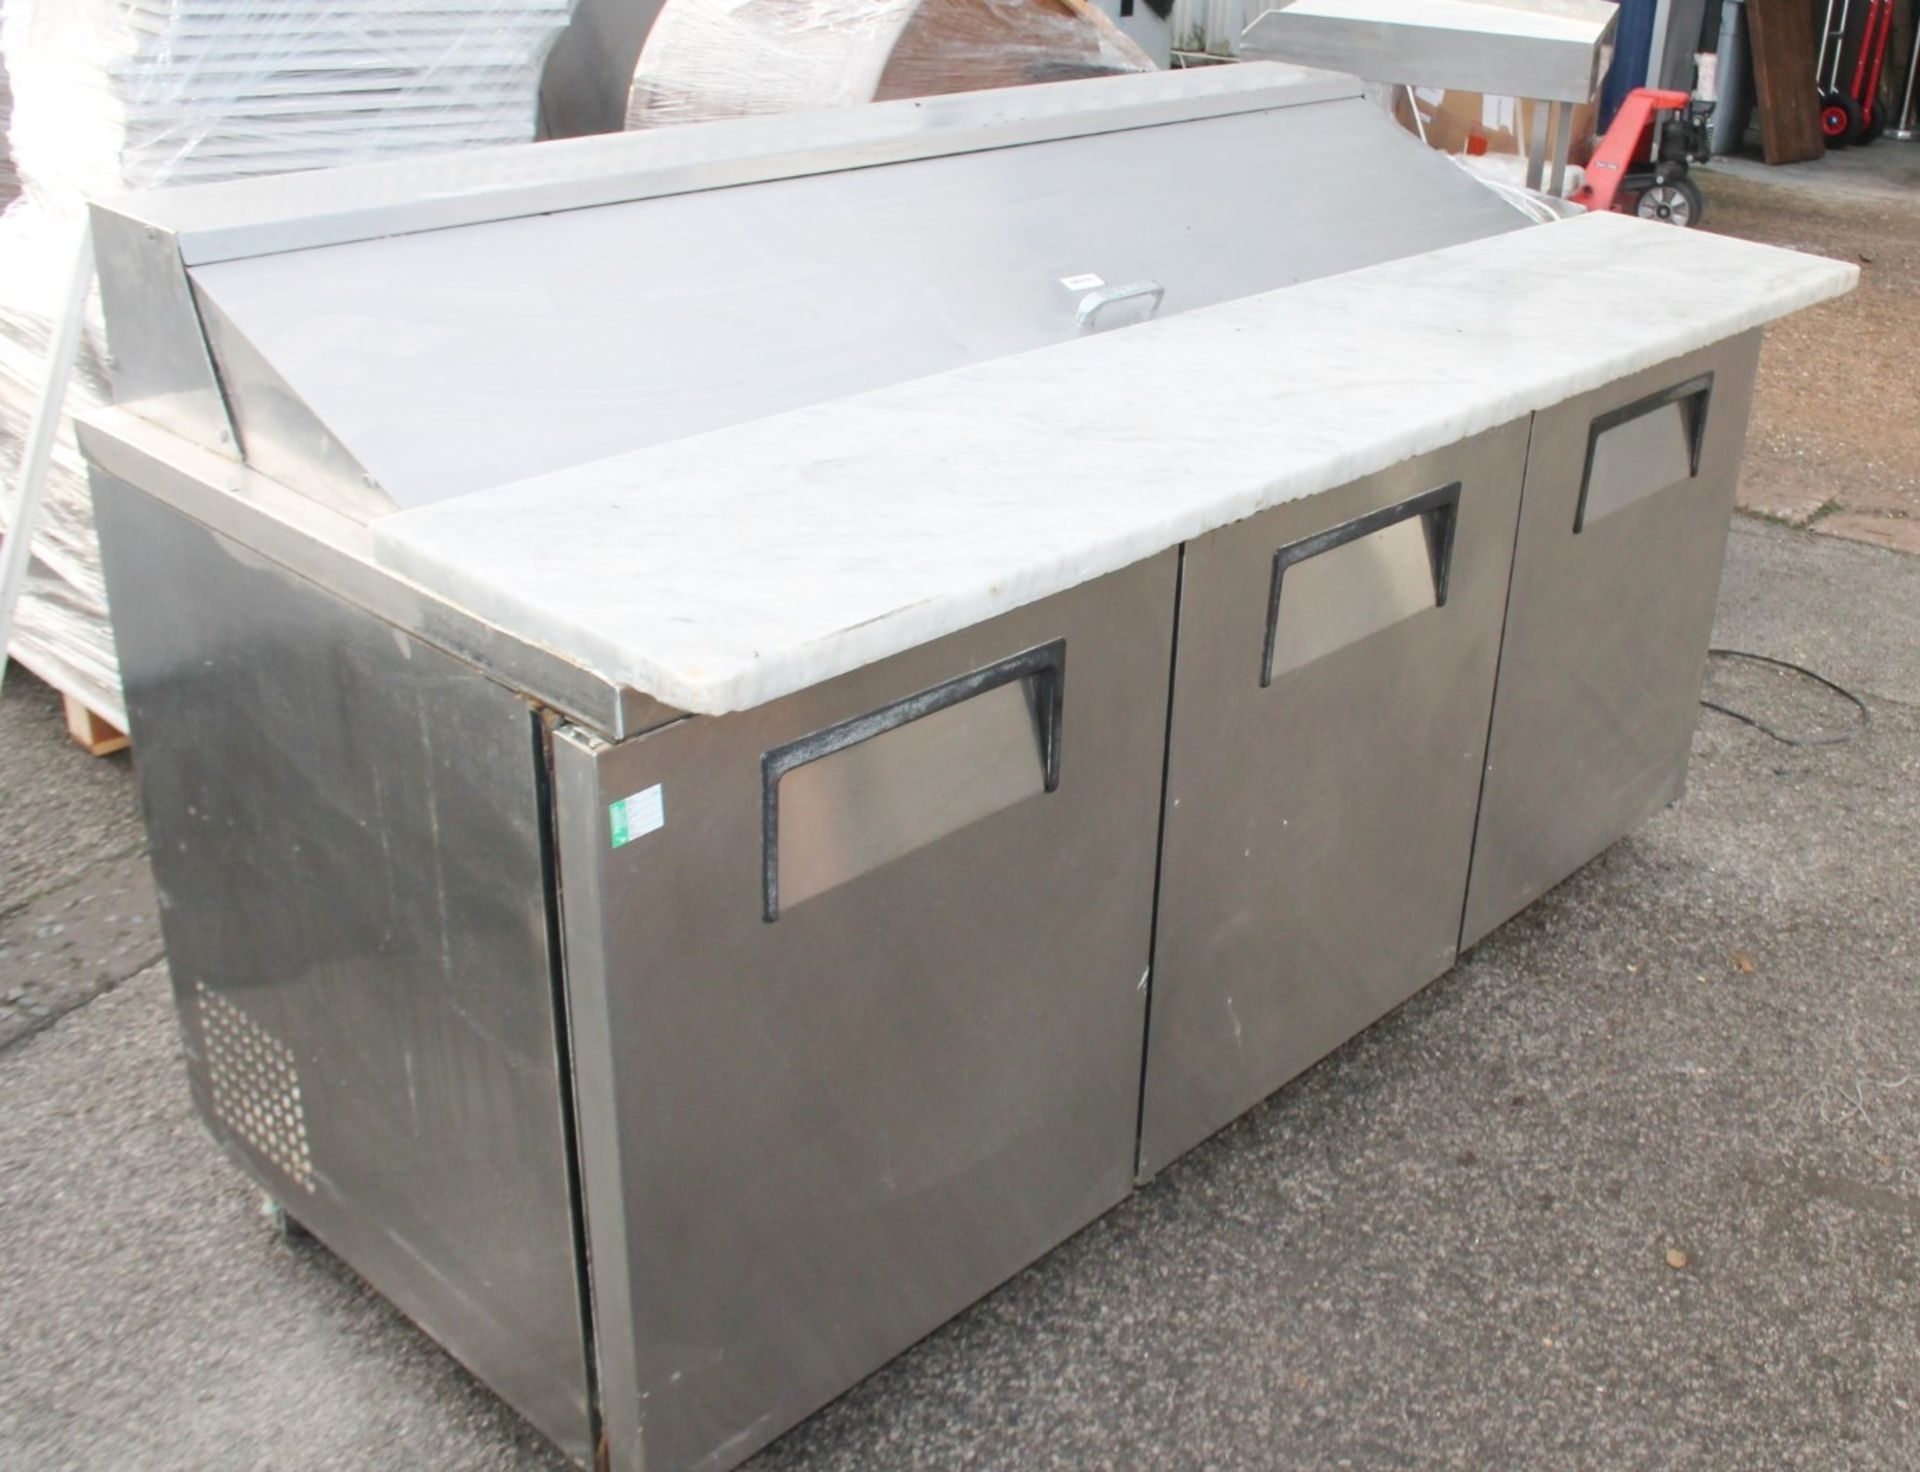 1 x Commercial 3-Door Refrigerated Counter In Stainless Steel - Ref: GEN763 WH2 - CL811 BEL - - Image 4 of 5